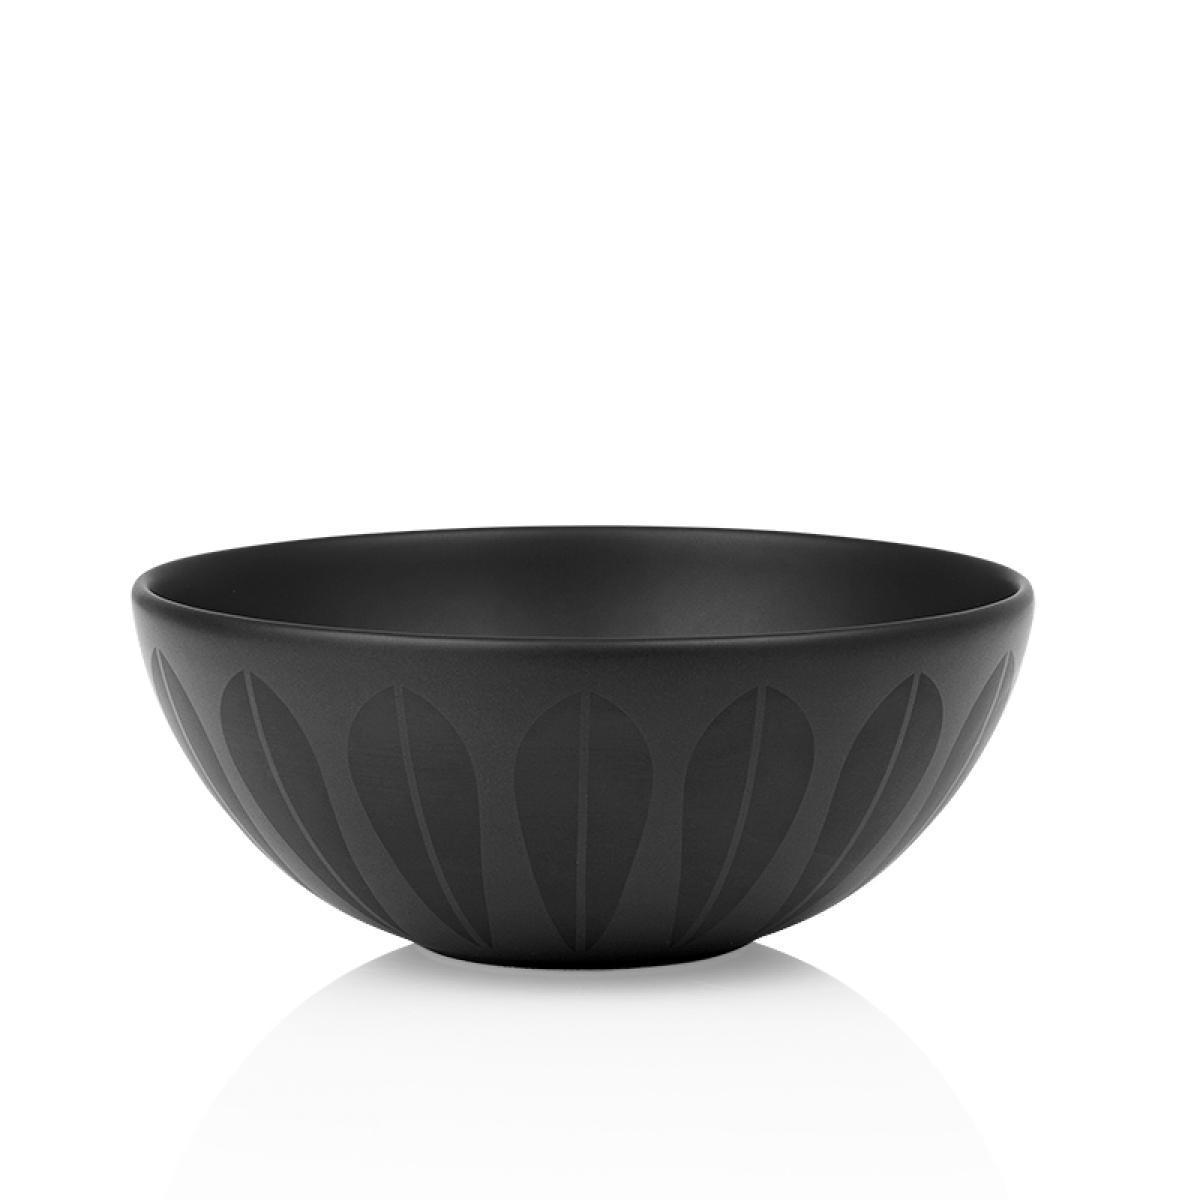 Lucie Kaas Arne Clausen Bowl černá, 24 cm